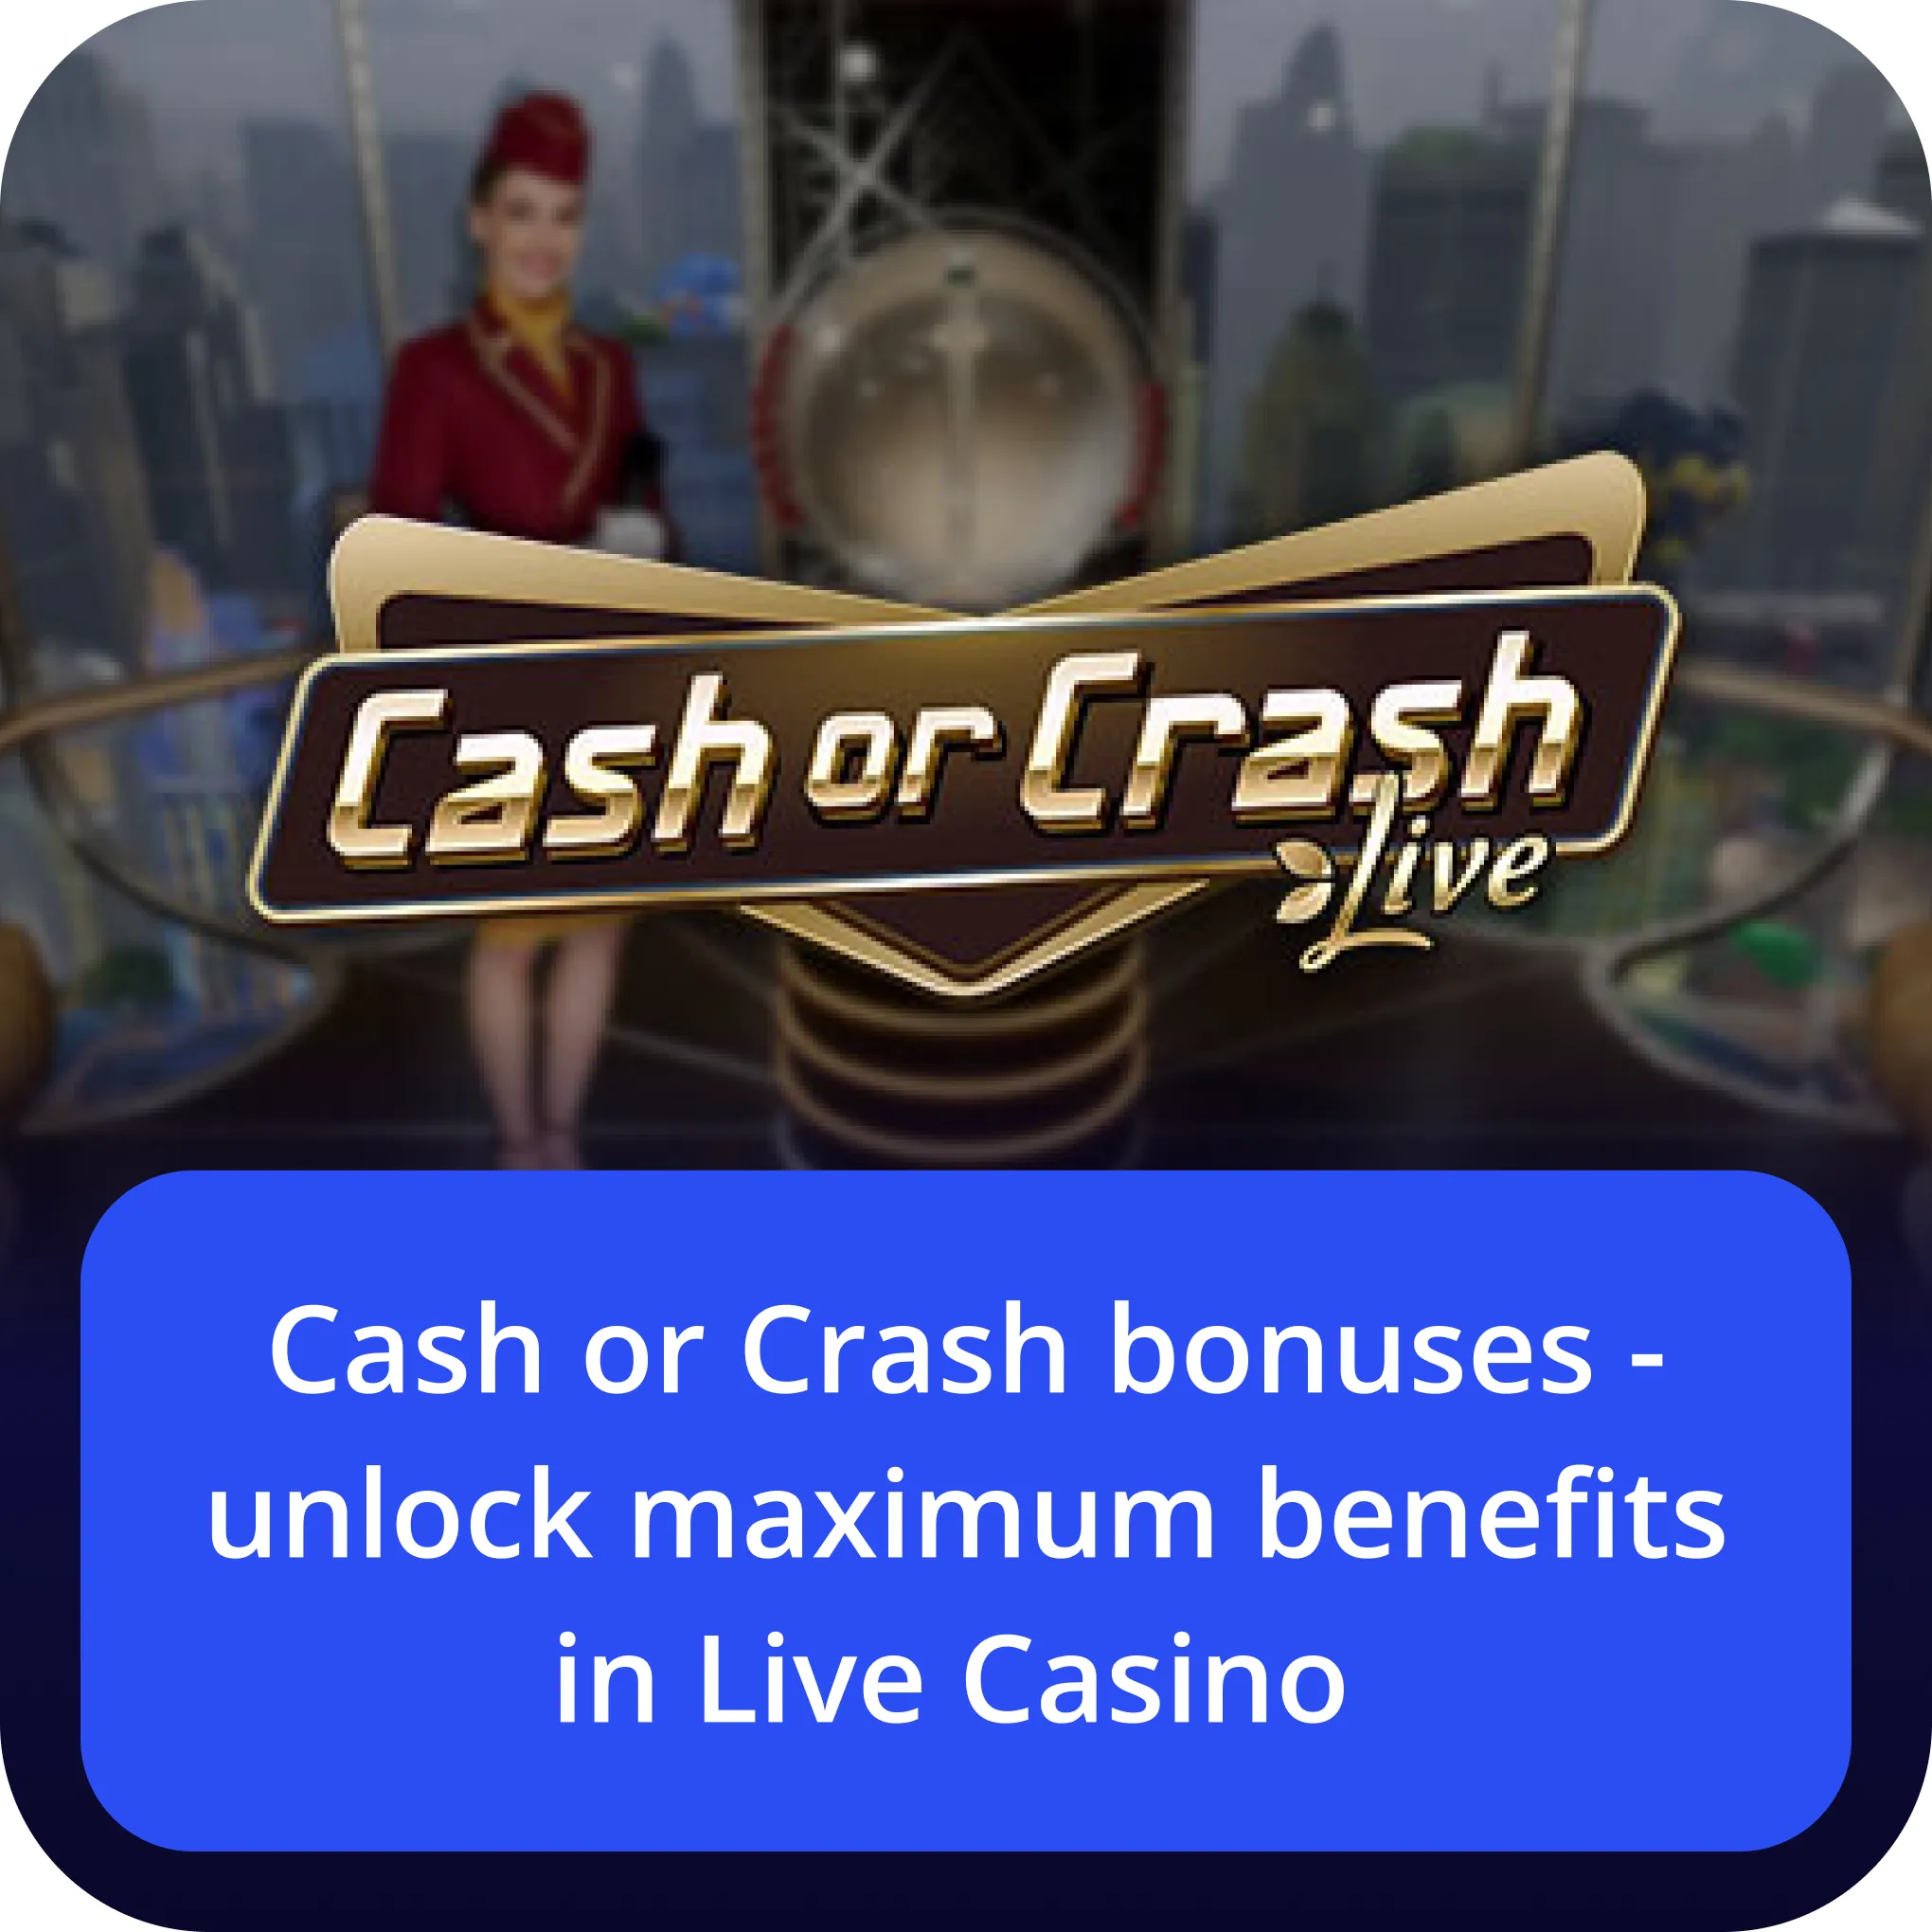 Cash or Crash bonuses